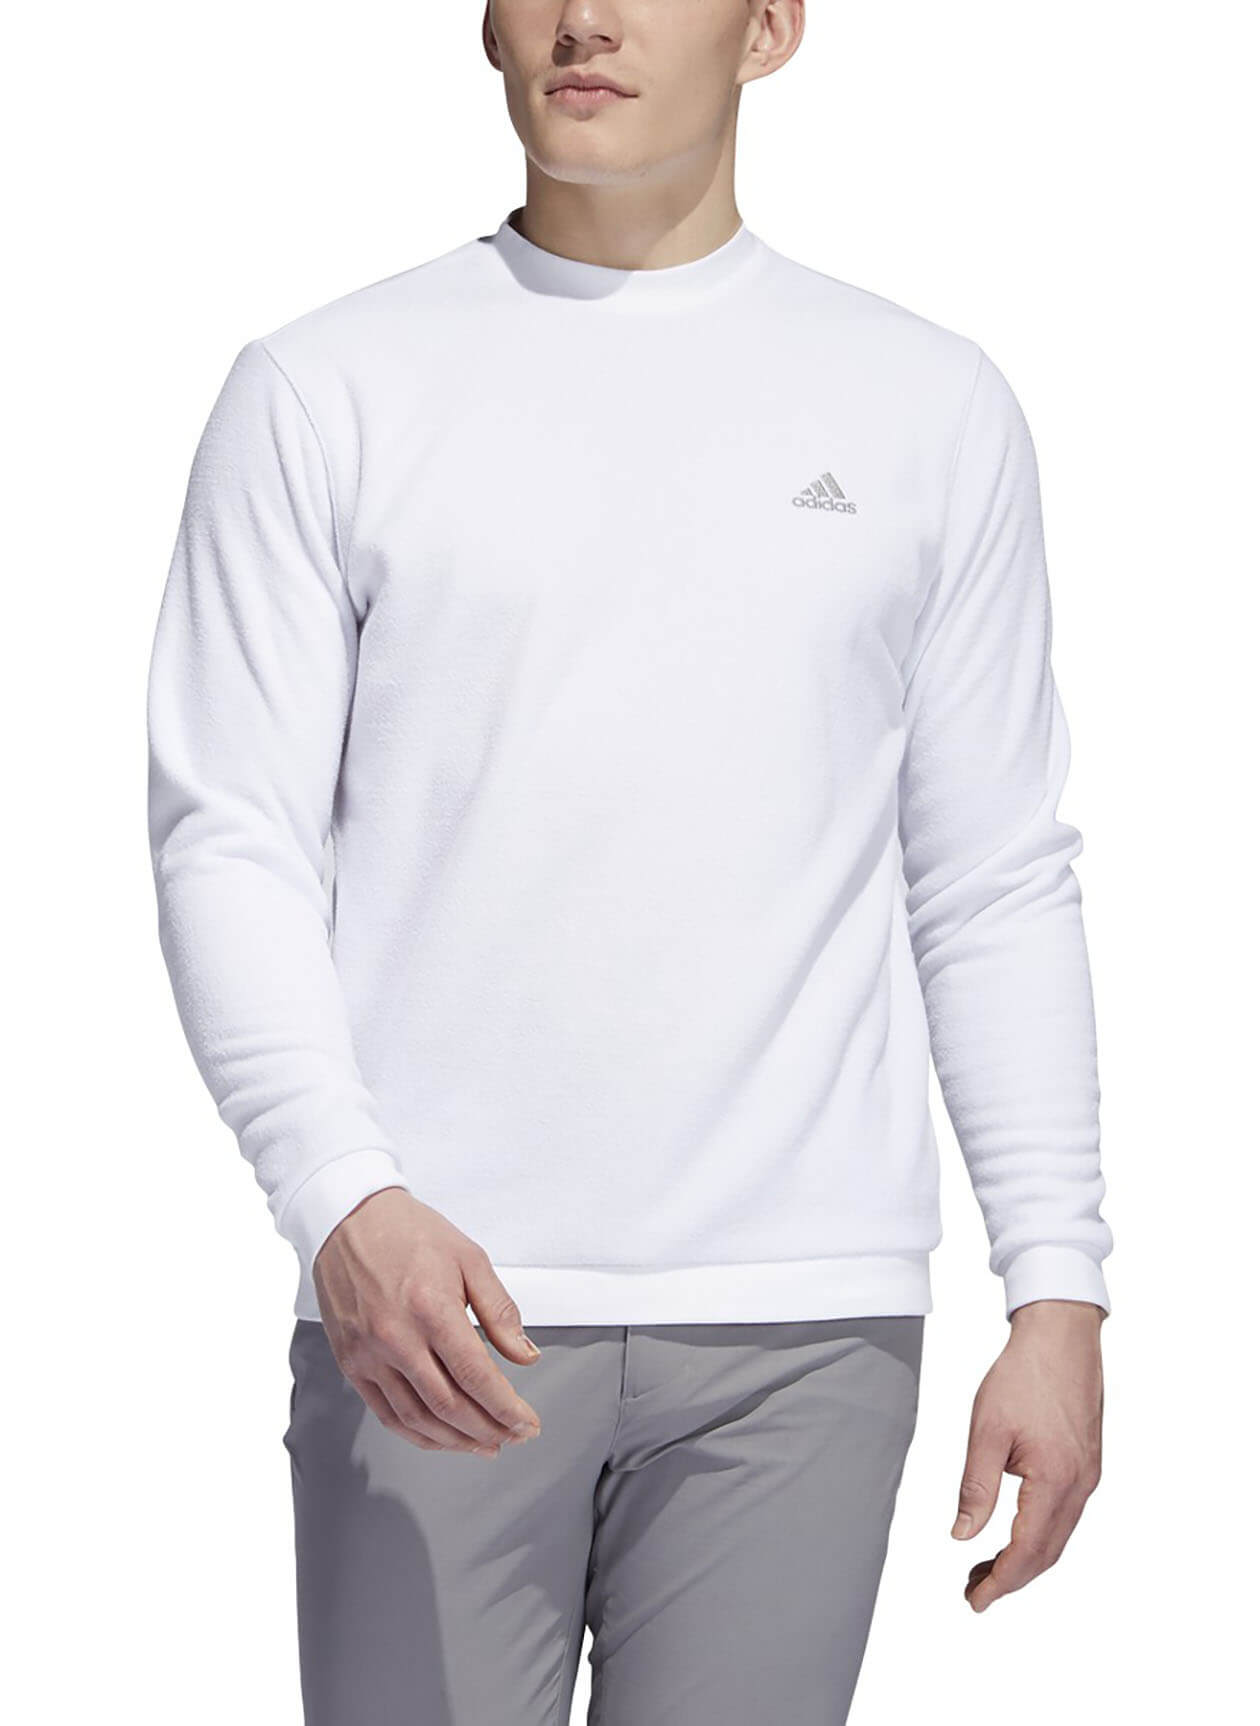 Adidas AD119 - Golf Men's Core Crewneck Sweatshirt